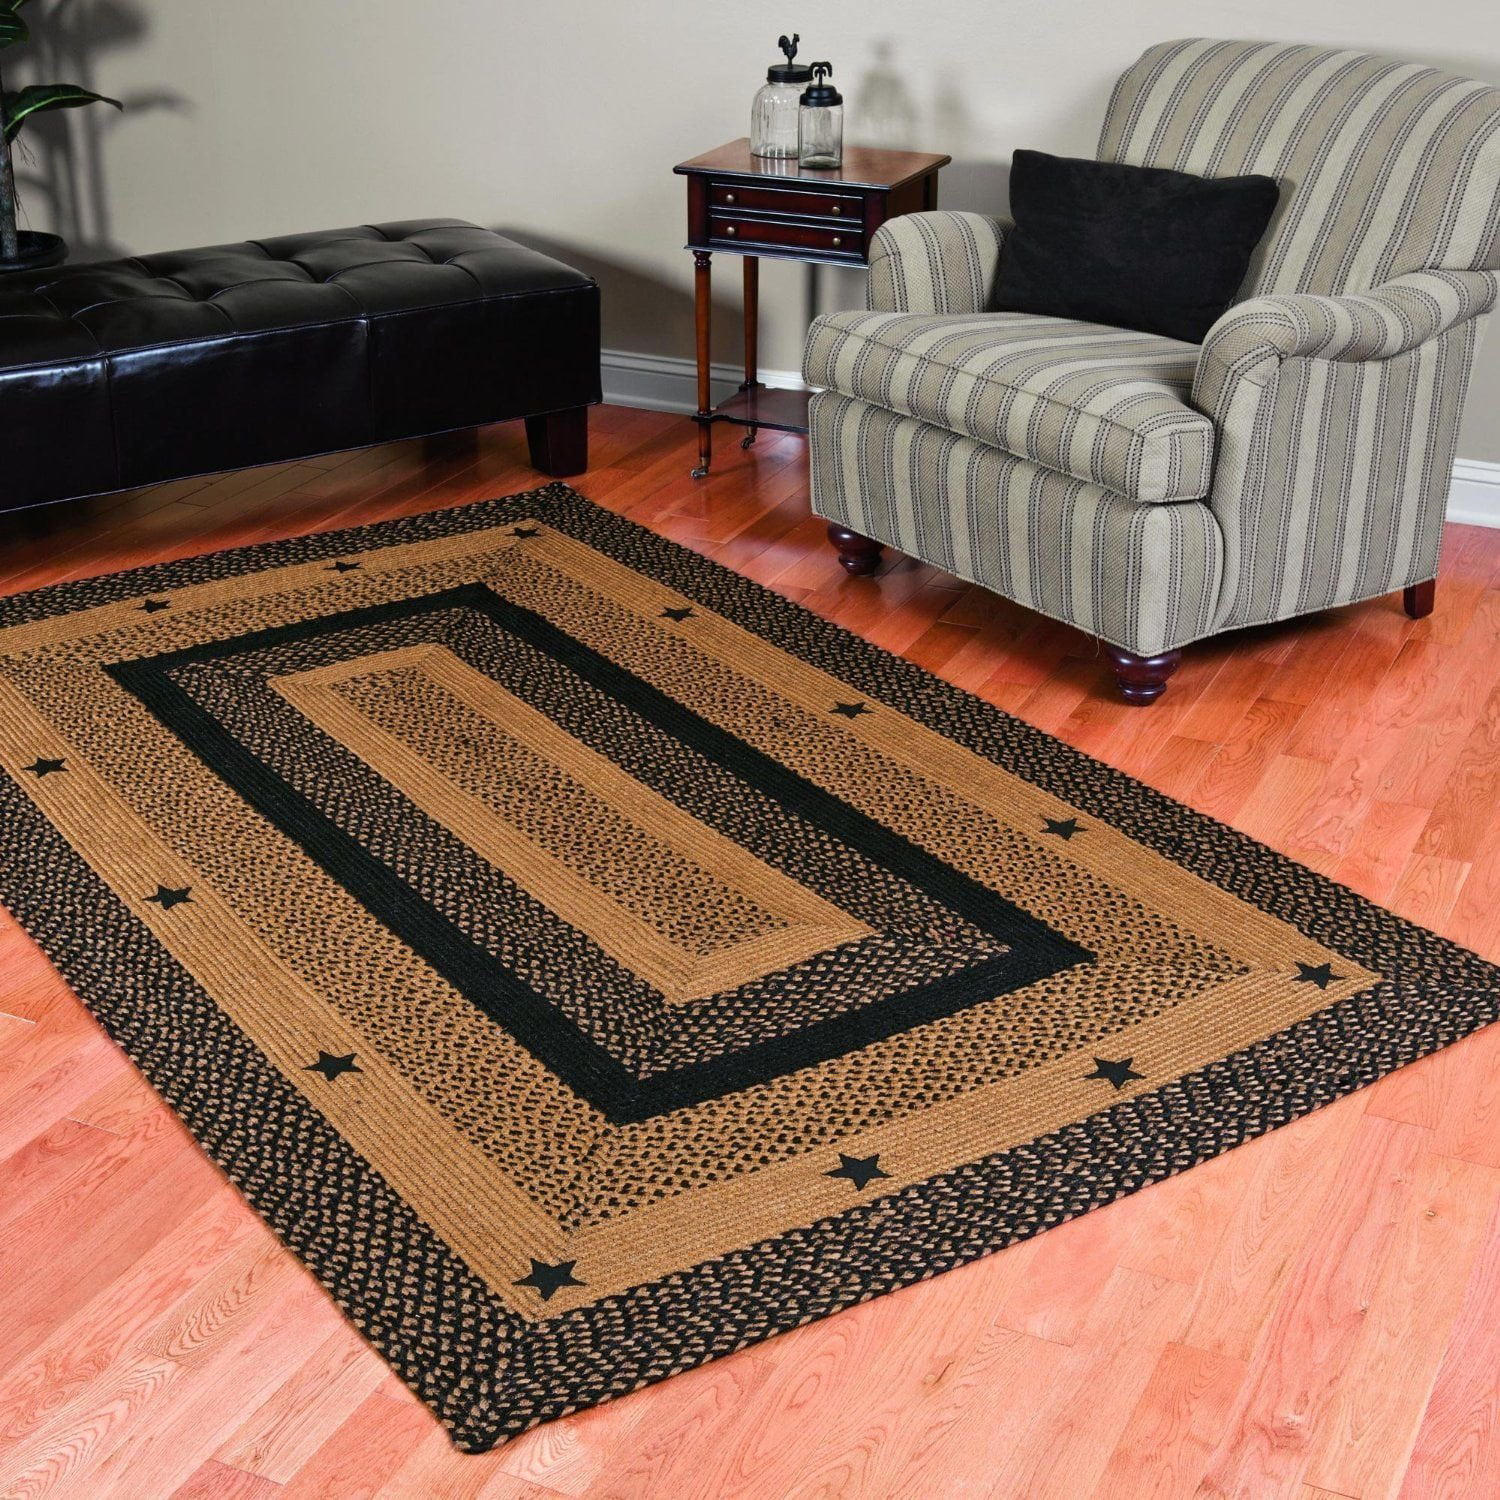 IHF Home Decor Country Star Black Braided Rug 22 x 72 Rectangle Area Floor Carpet Jute Natural Fiber